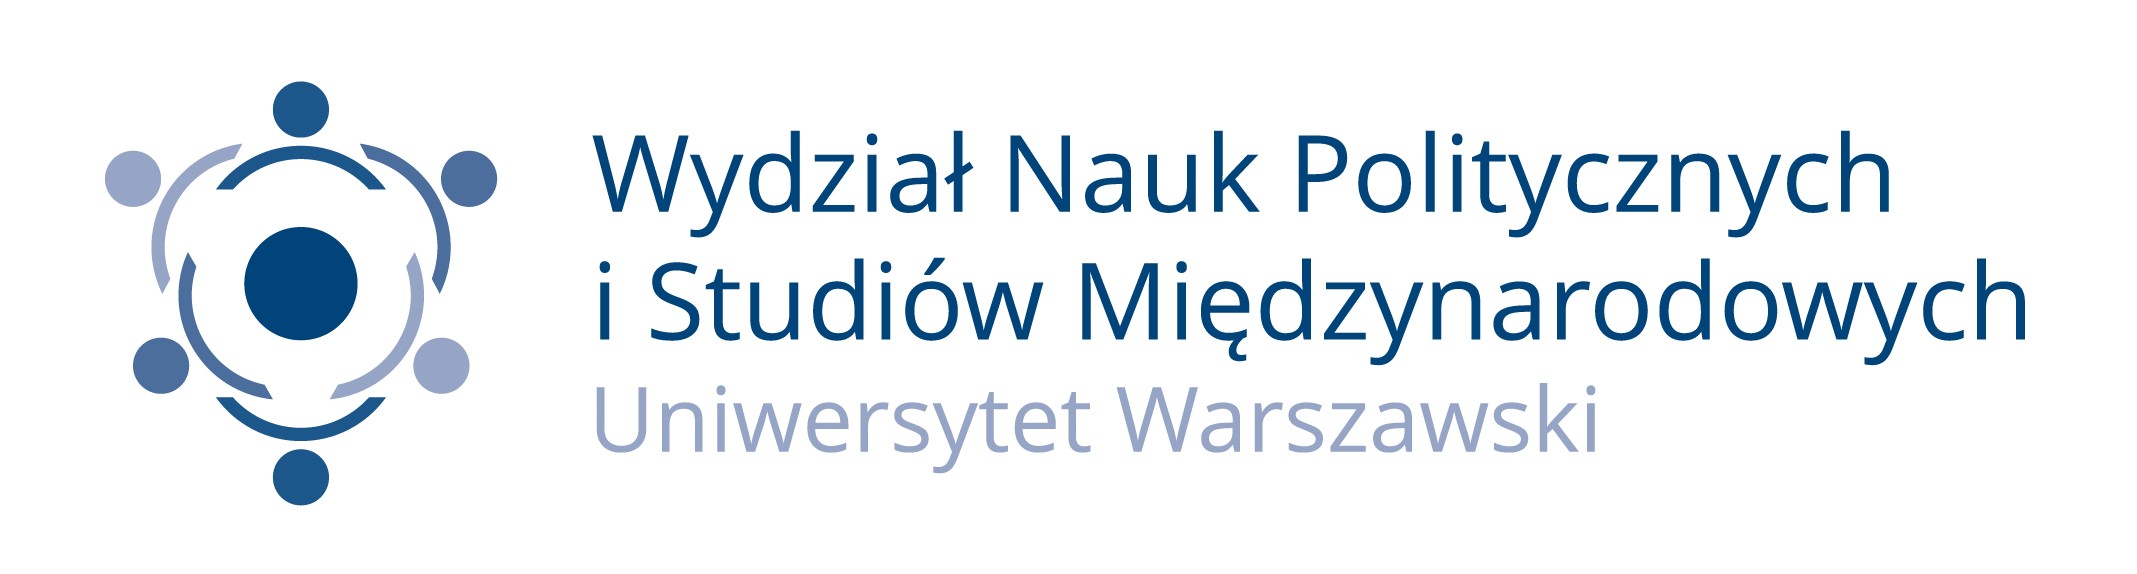 Logo_wnpism_uw_krzywe.cdr